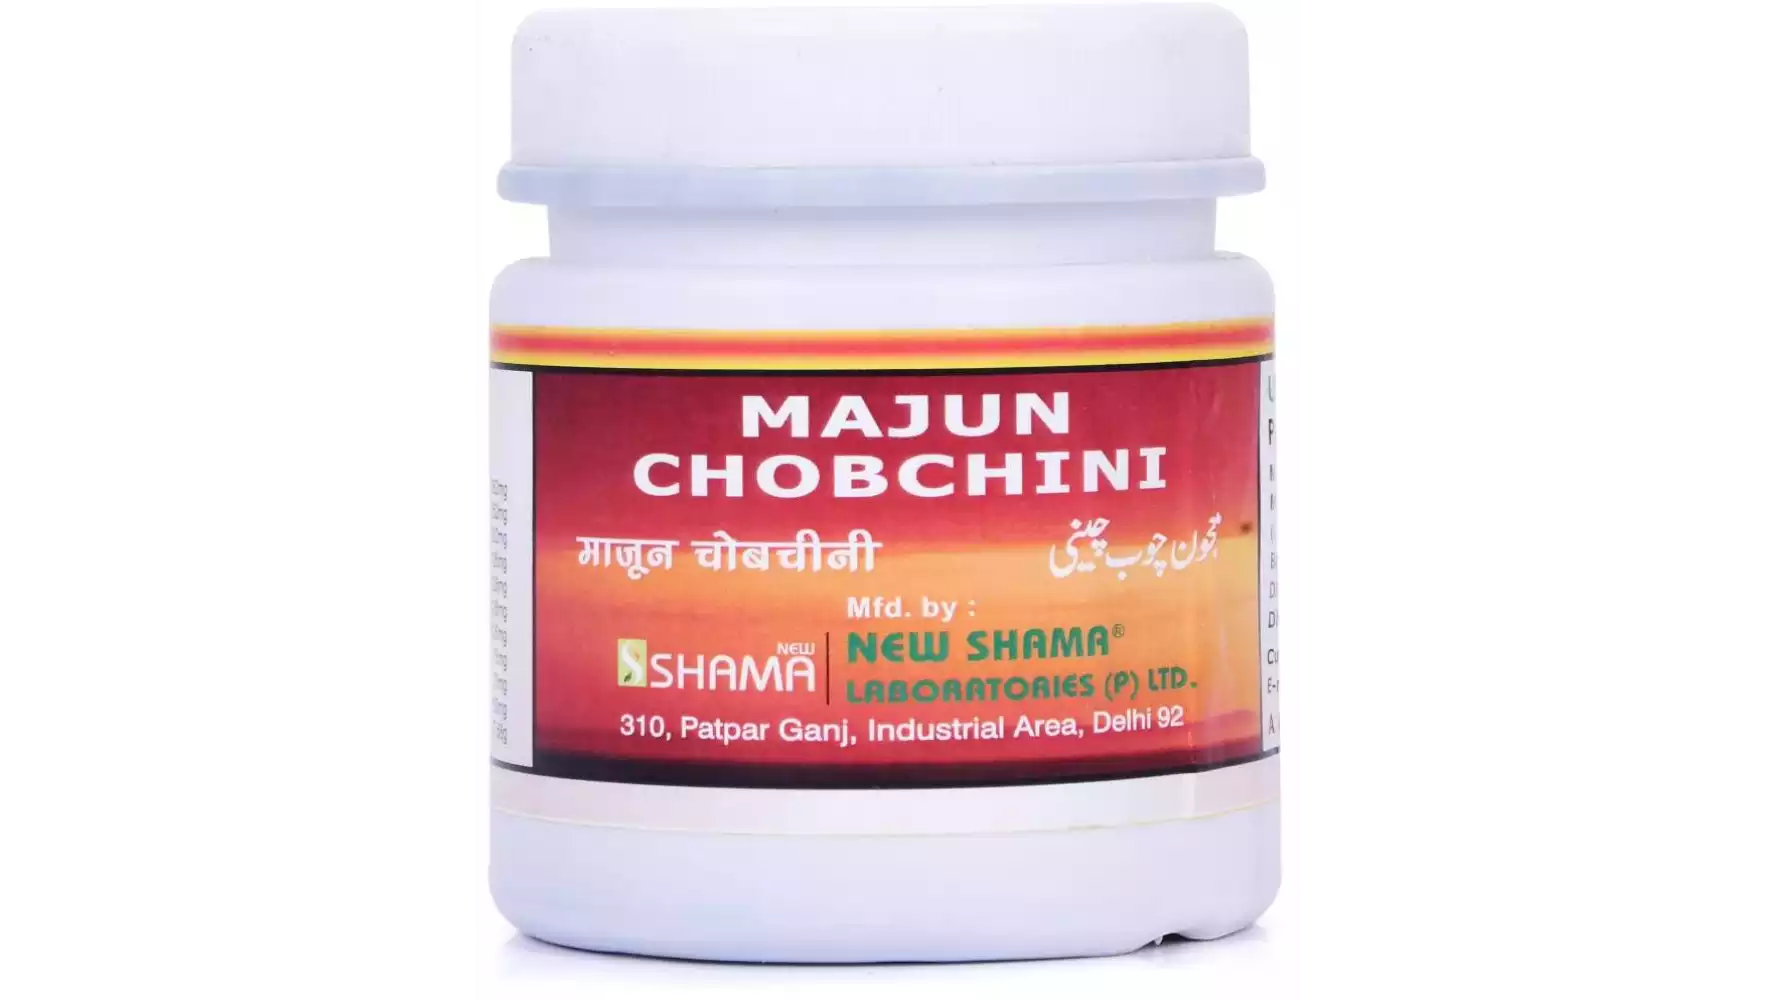 New Shama Majun Chobchini (1kg)